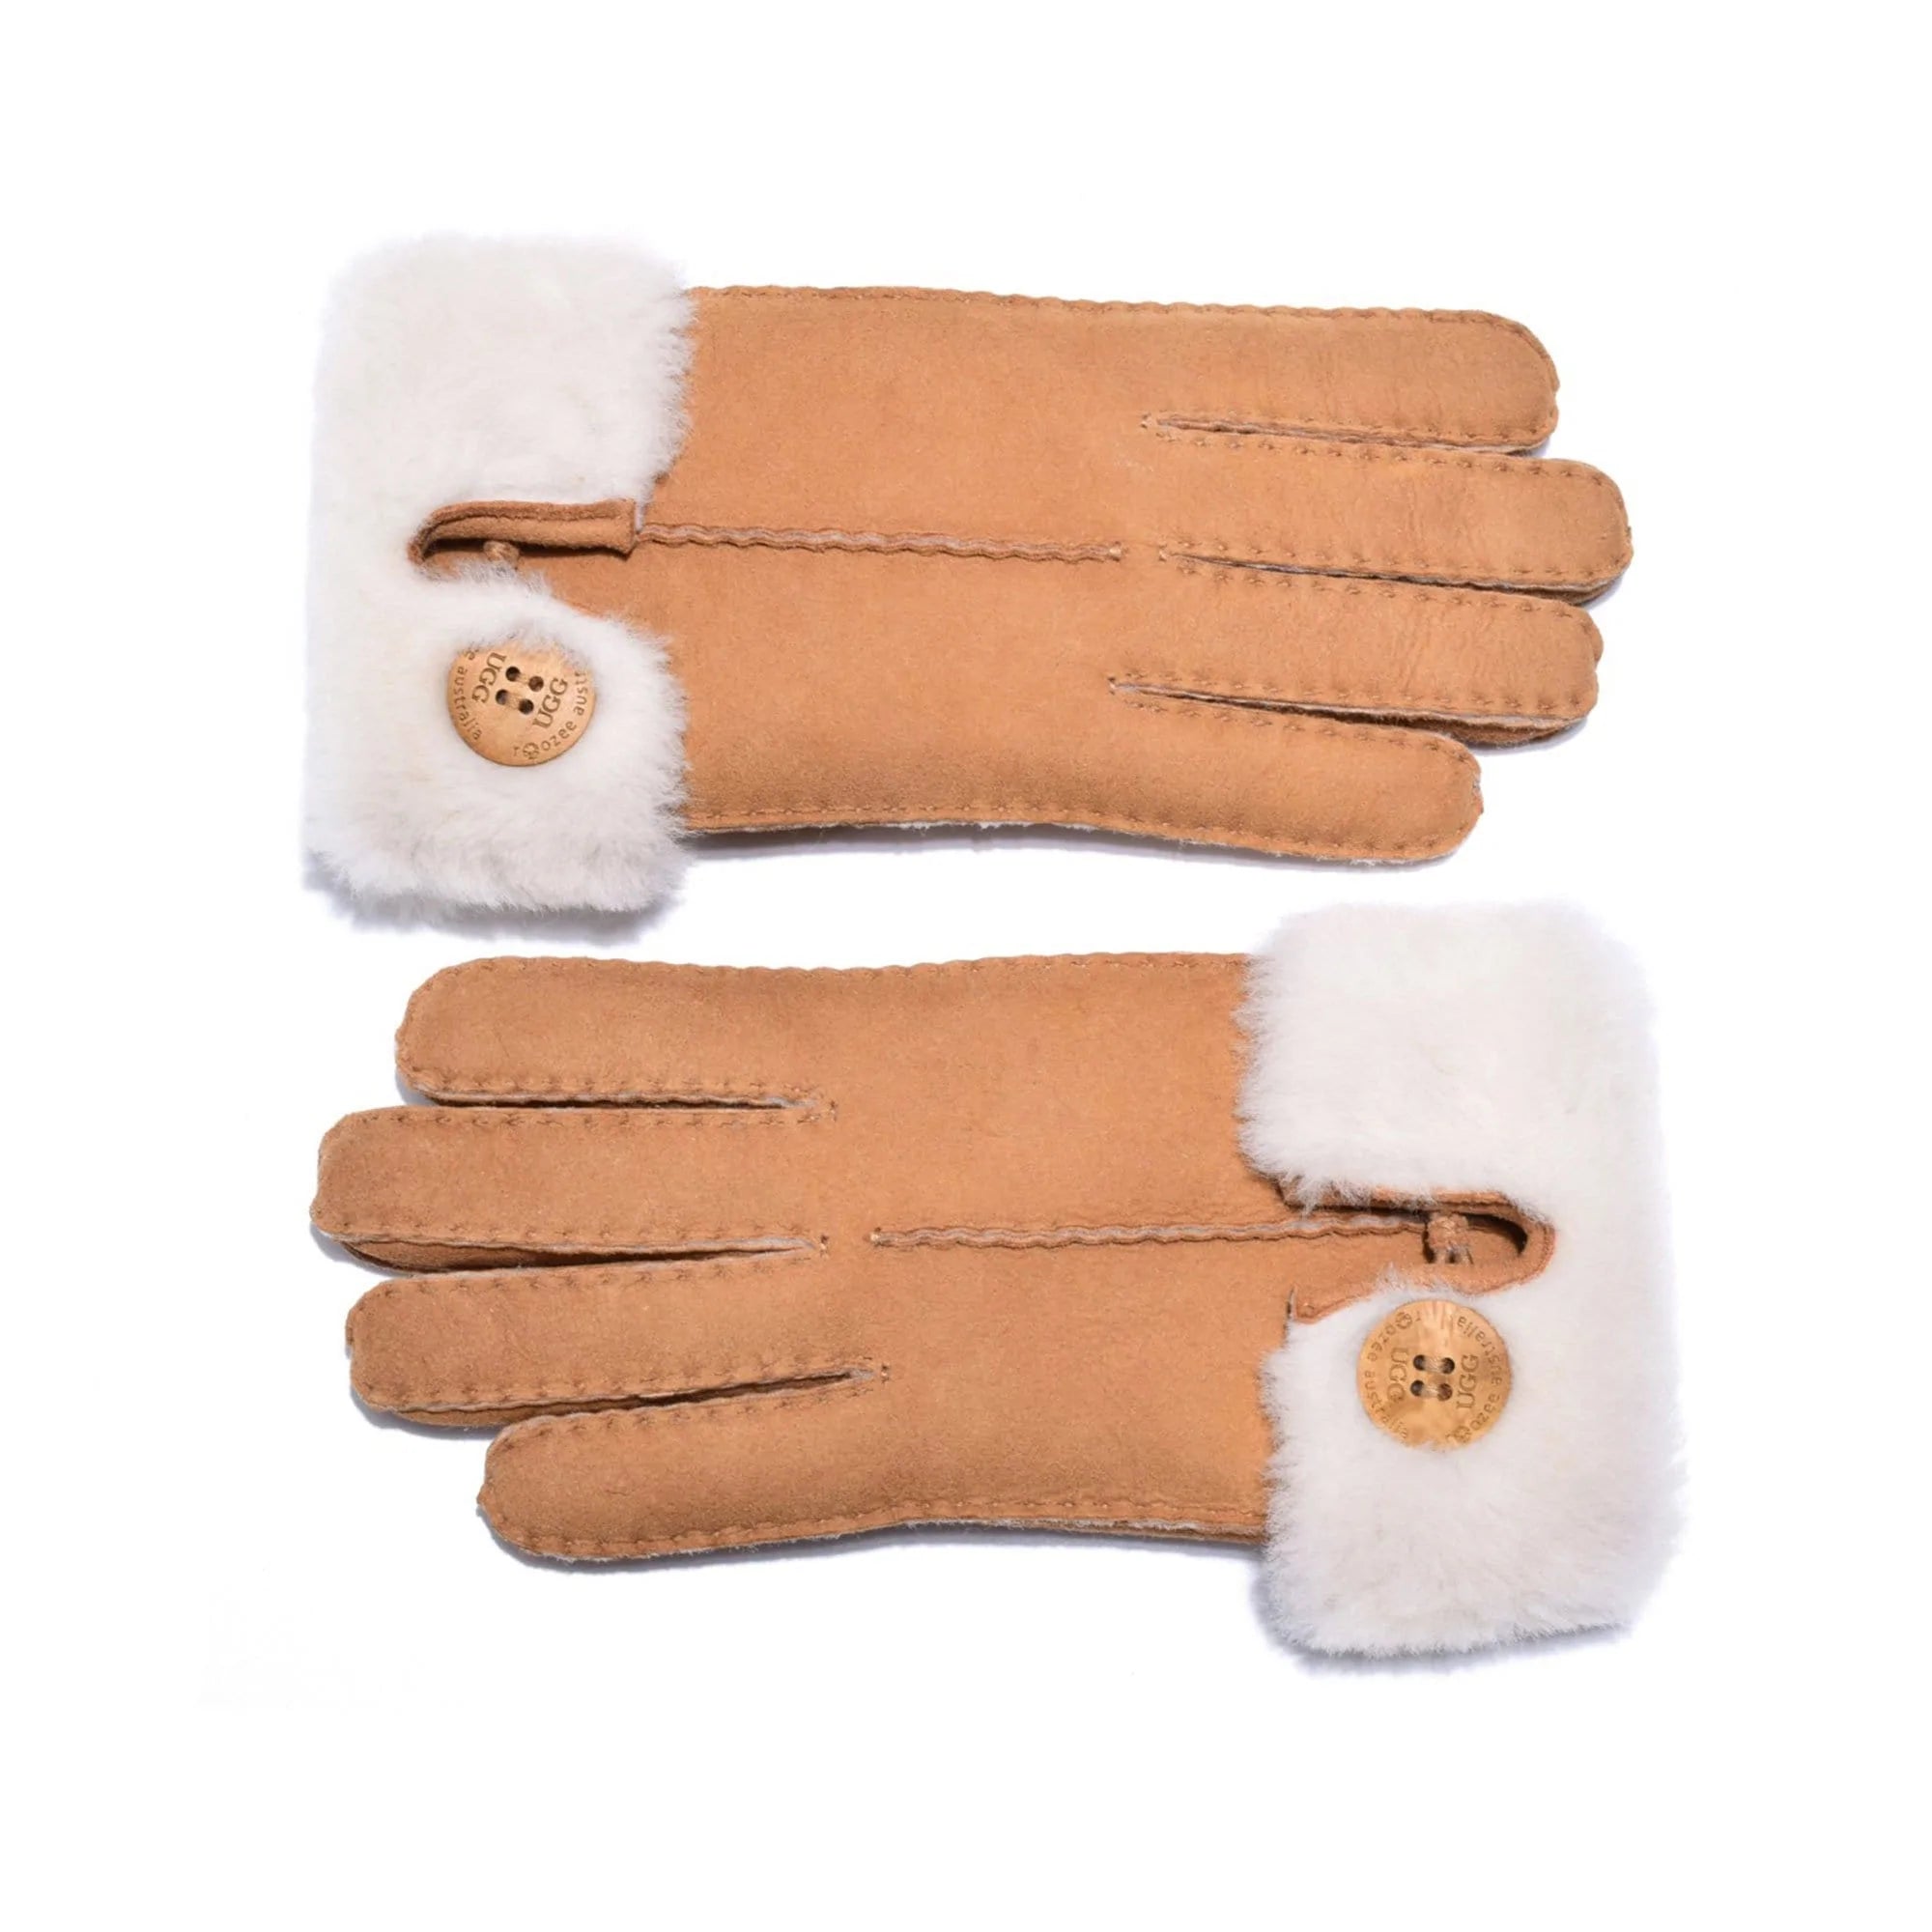  - UGG Button Sheepskin Gloves - Original UGG Australia Classic